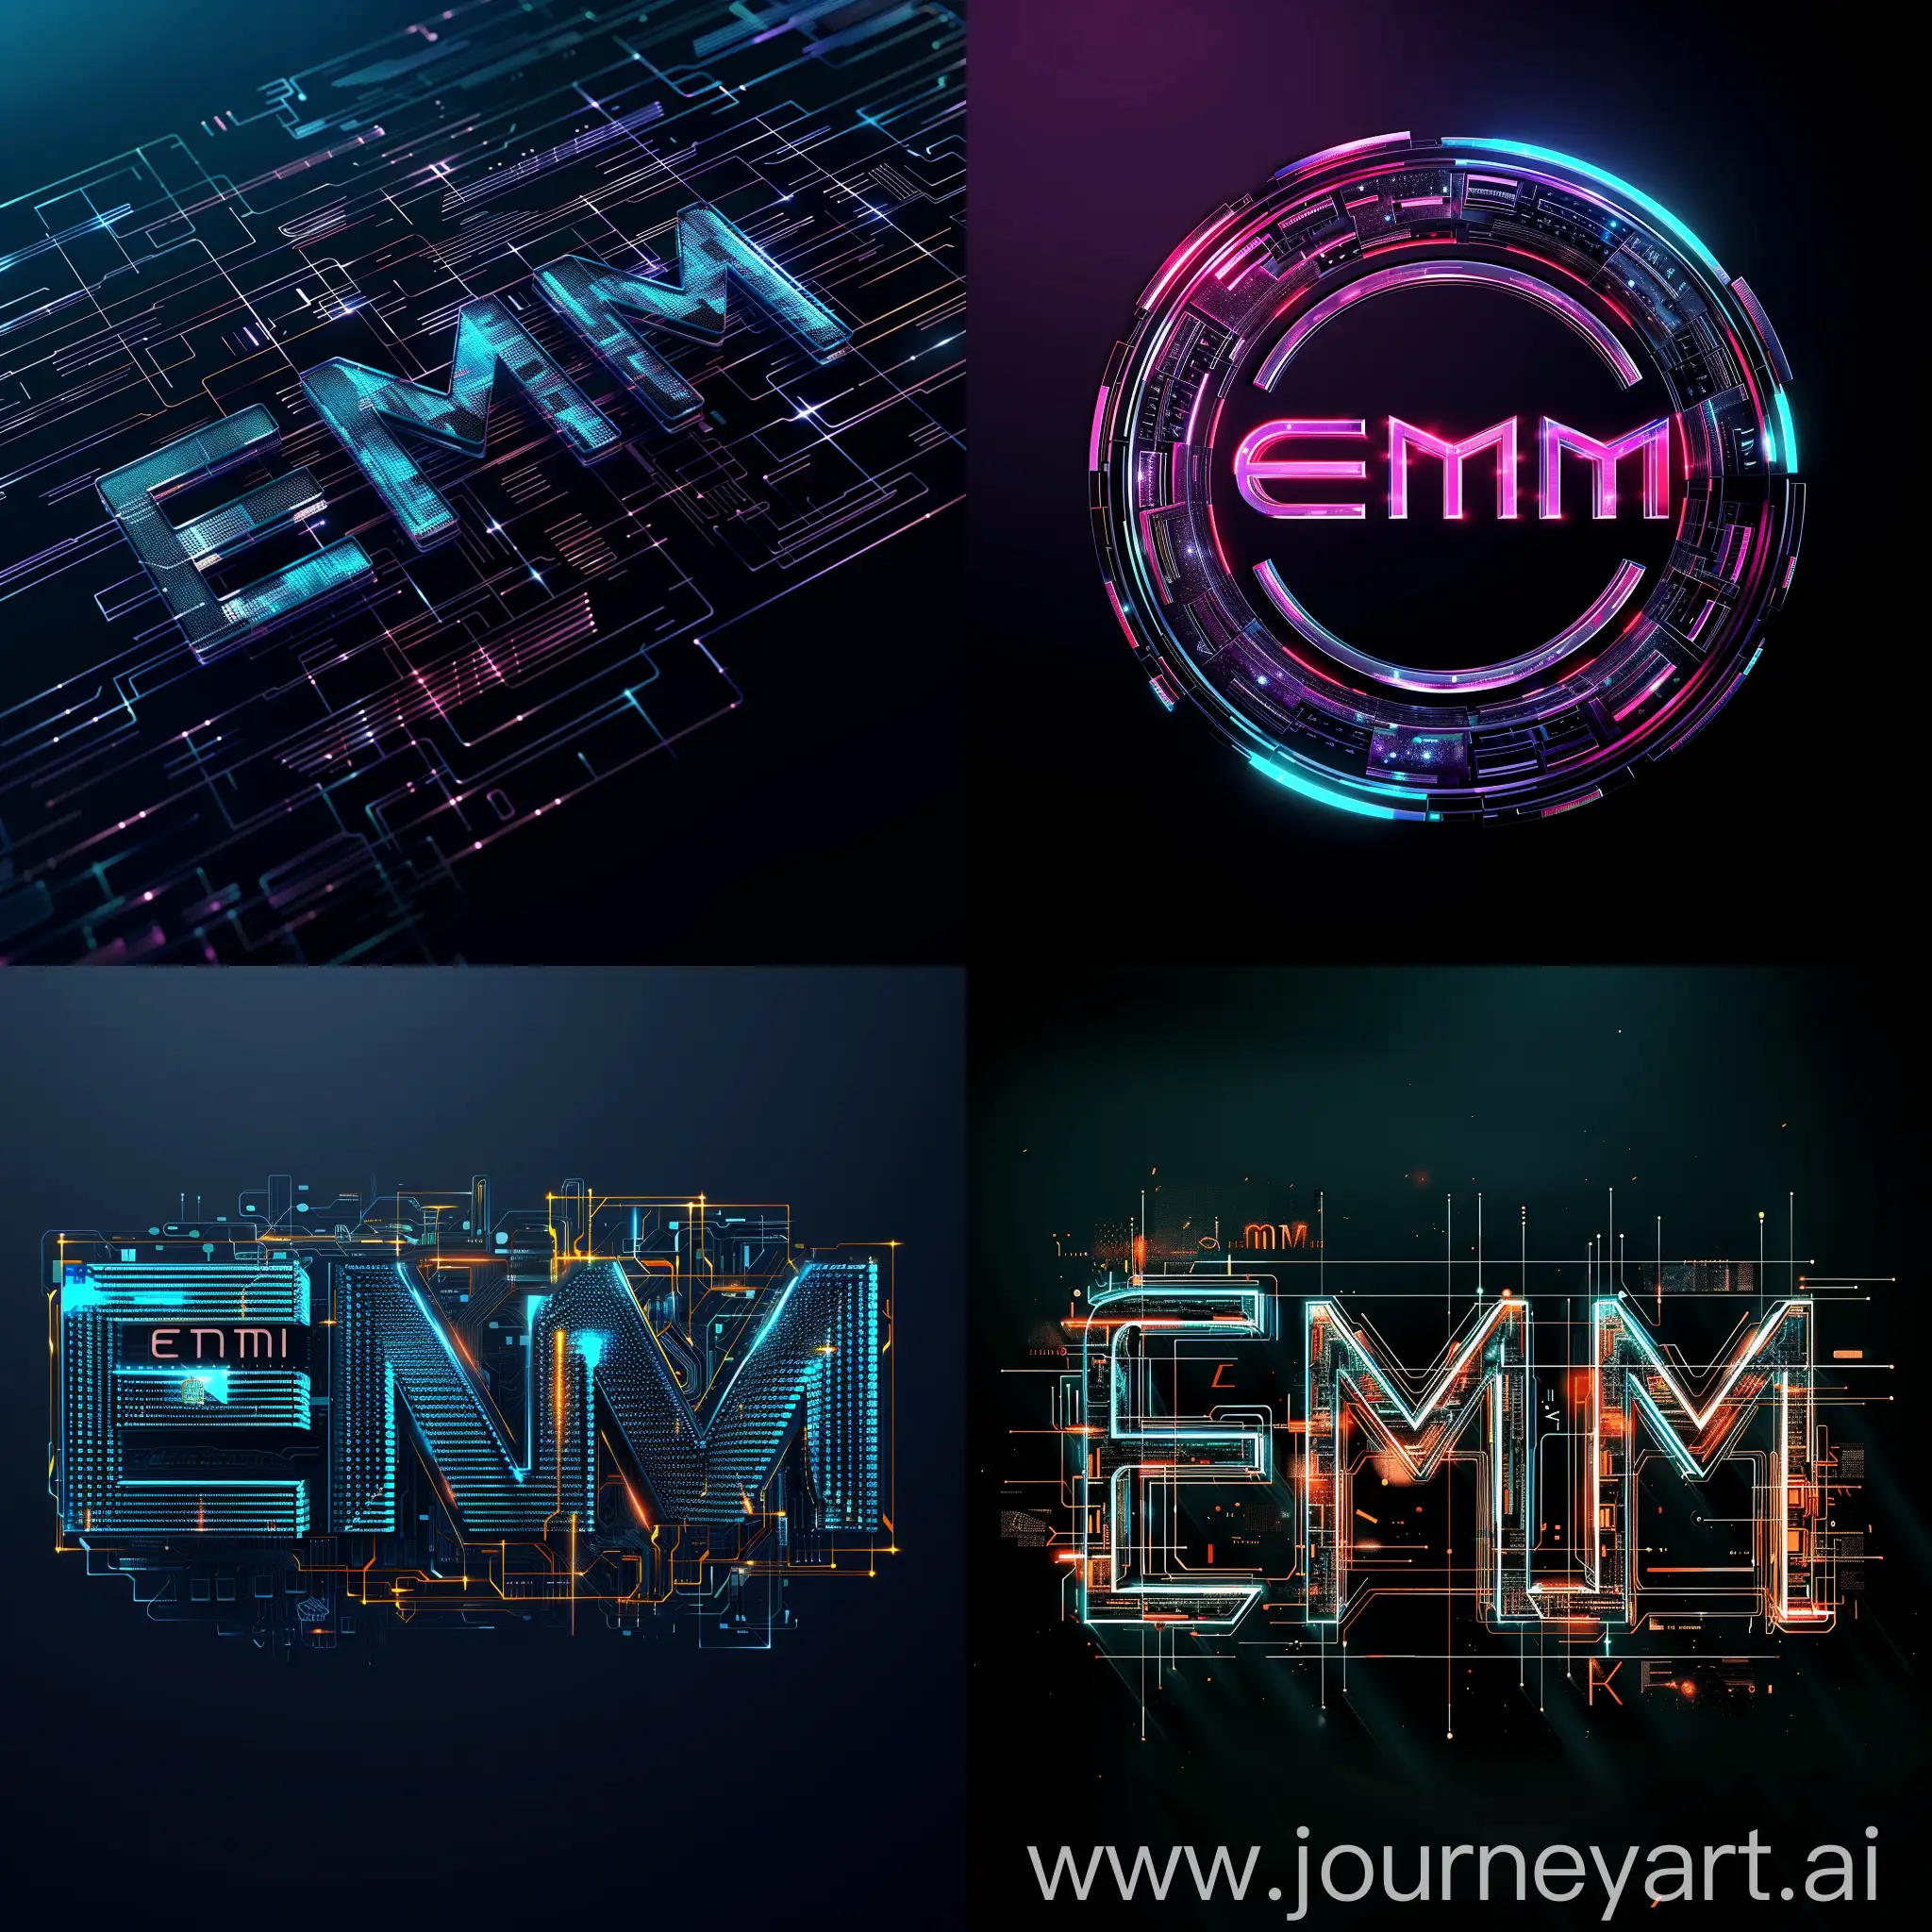 a futuristic logo text for 'EMMA'